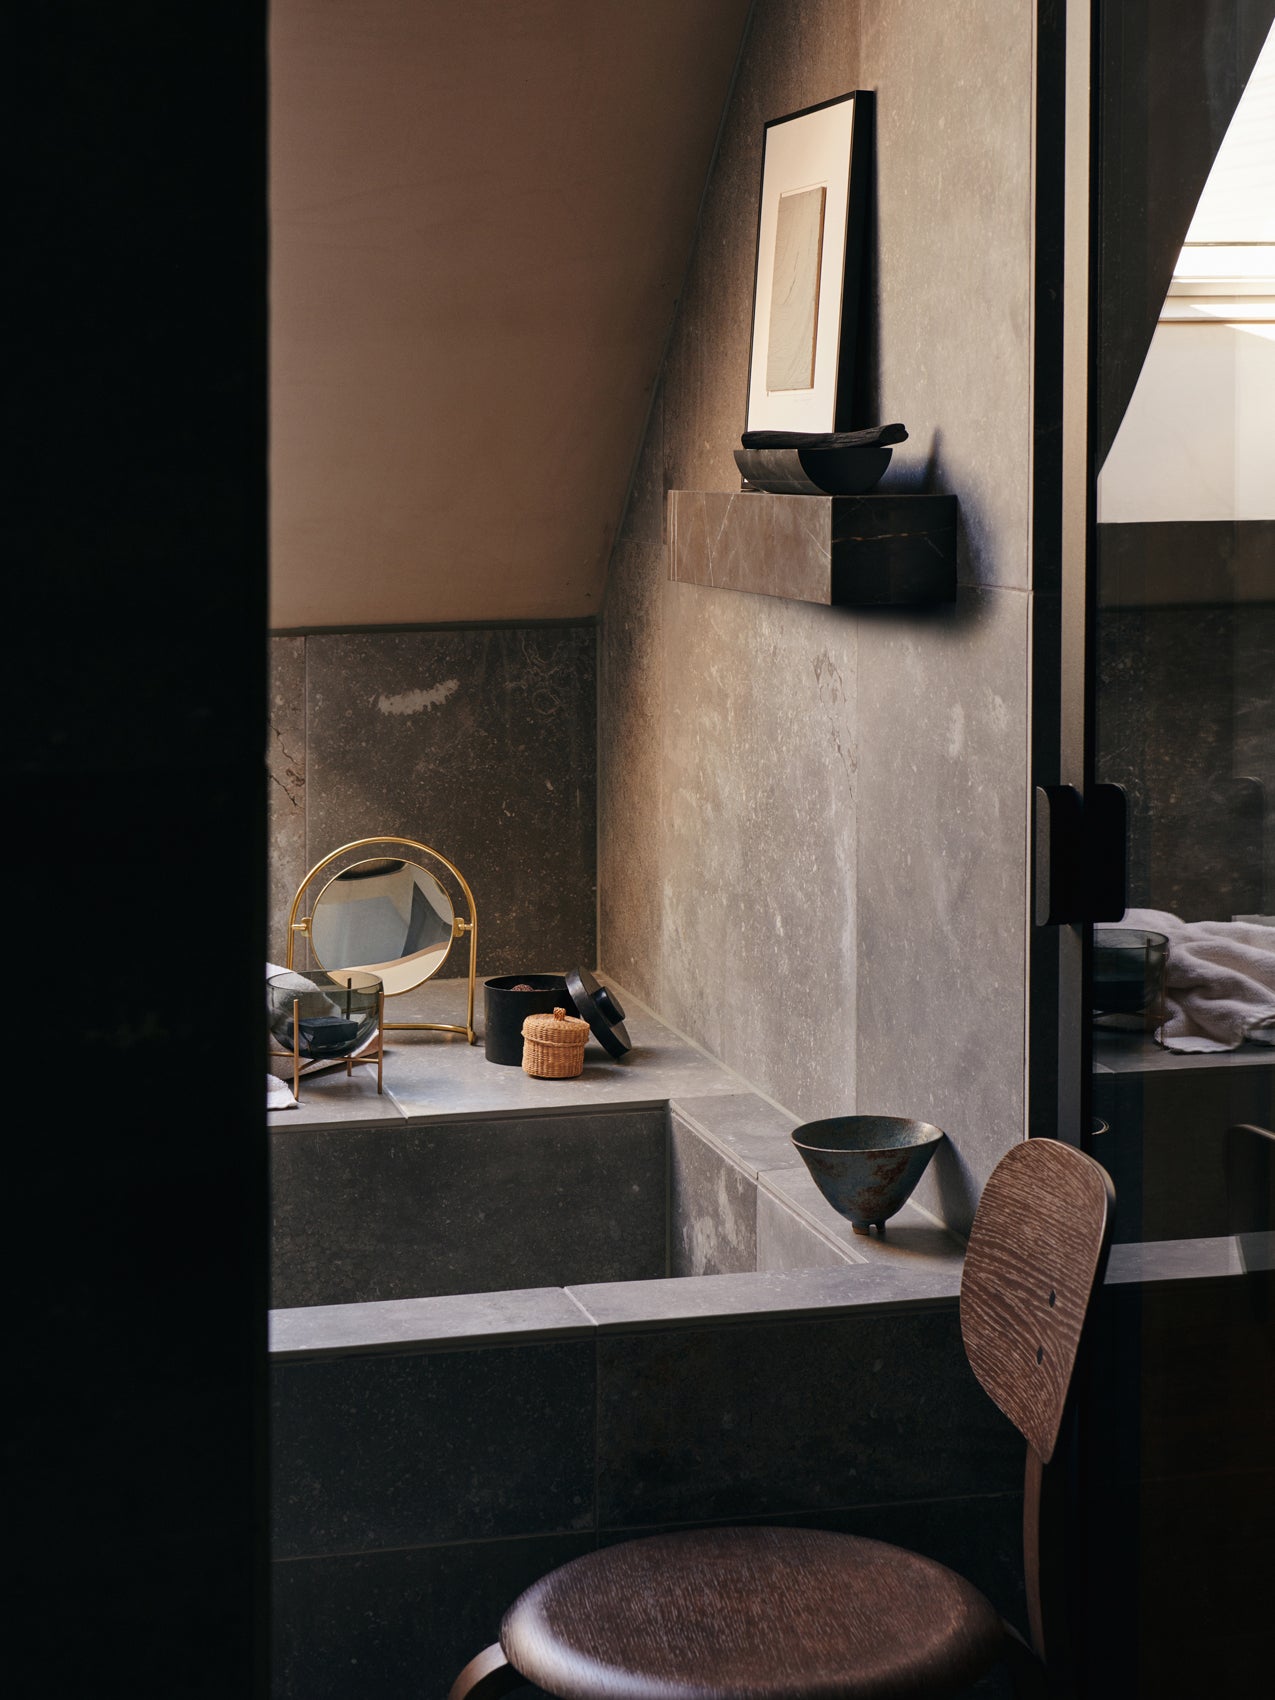 Nimbus Table Mirror-Table Mirror-Kroyer-Saetter-Lassen-menu-minimalist-modern-danish-design-home-decor